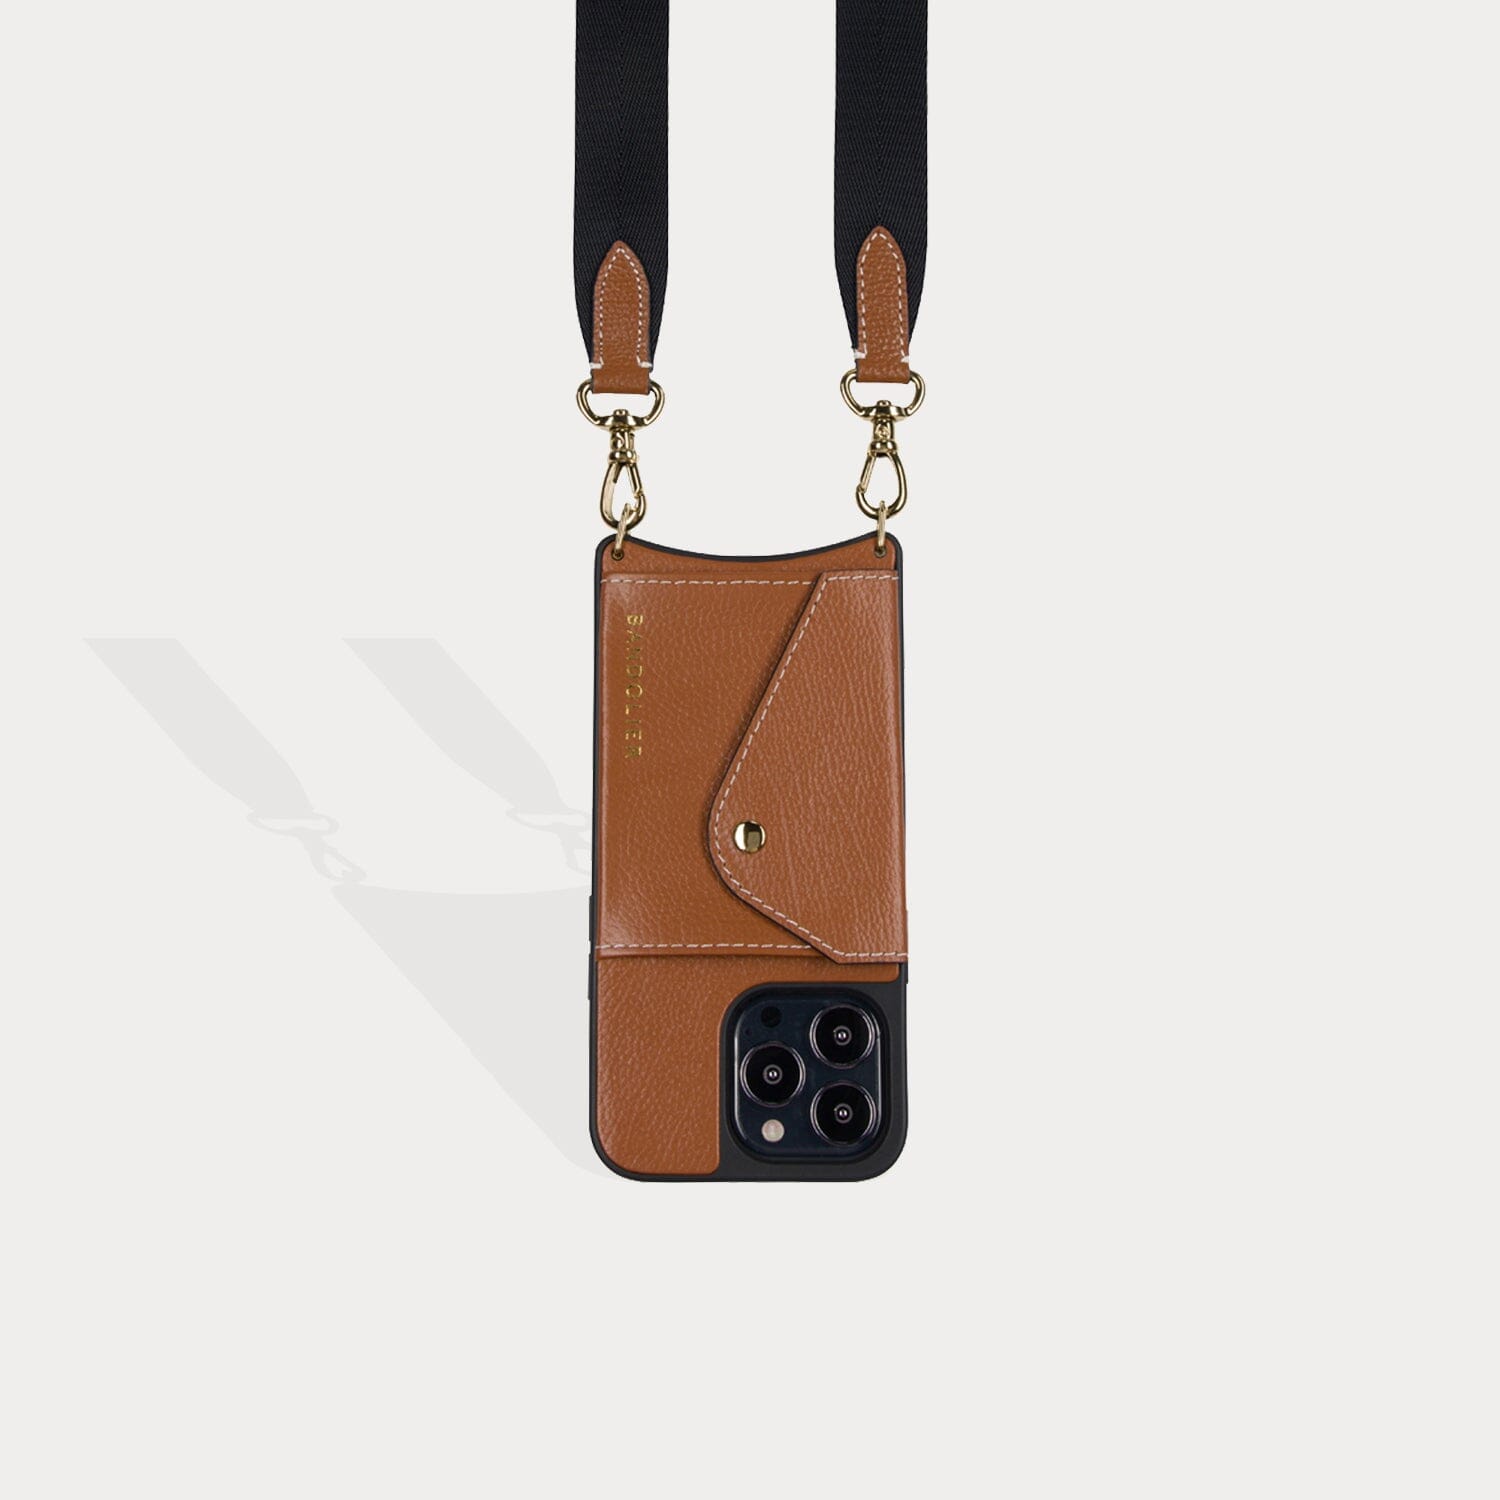 100% Genuine Leather Handbag Strap With Golden Buckle, Short/long